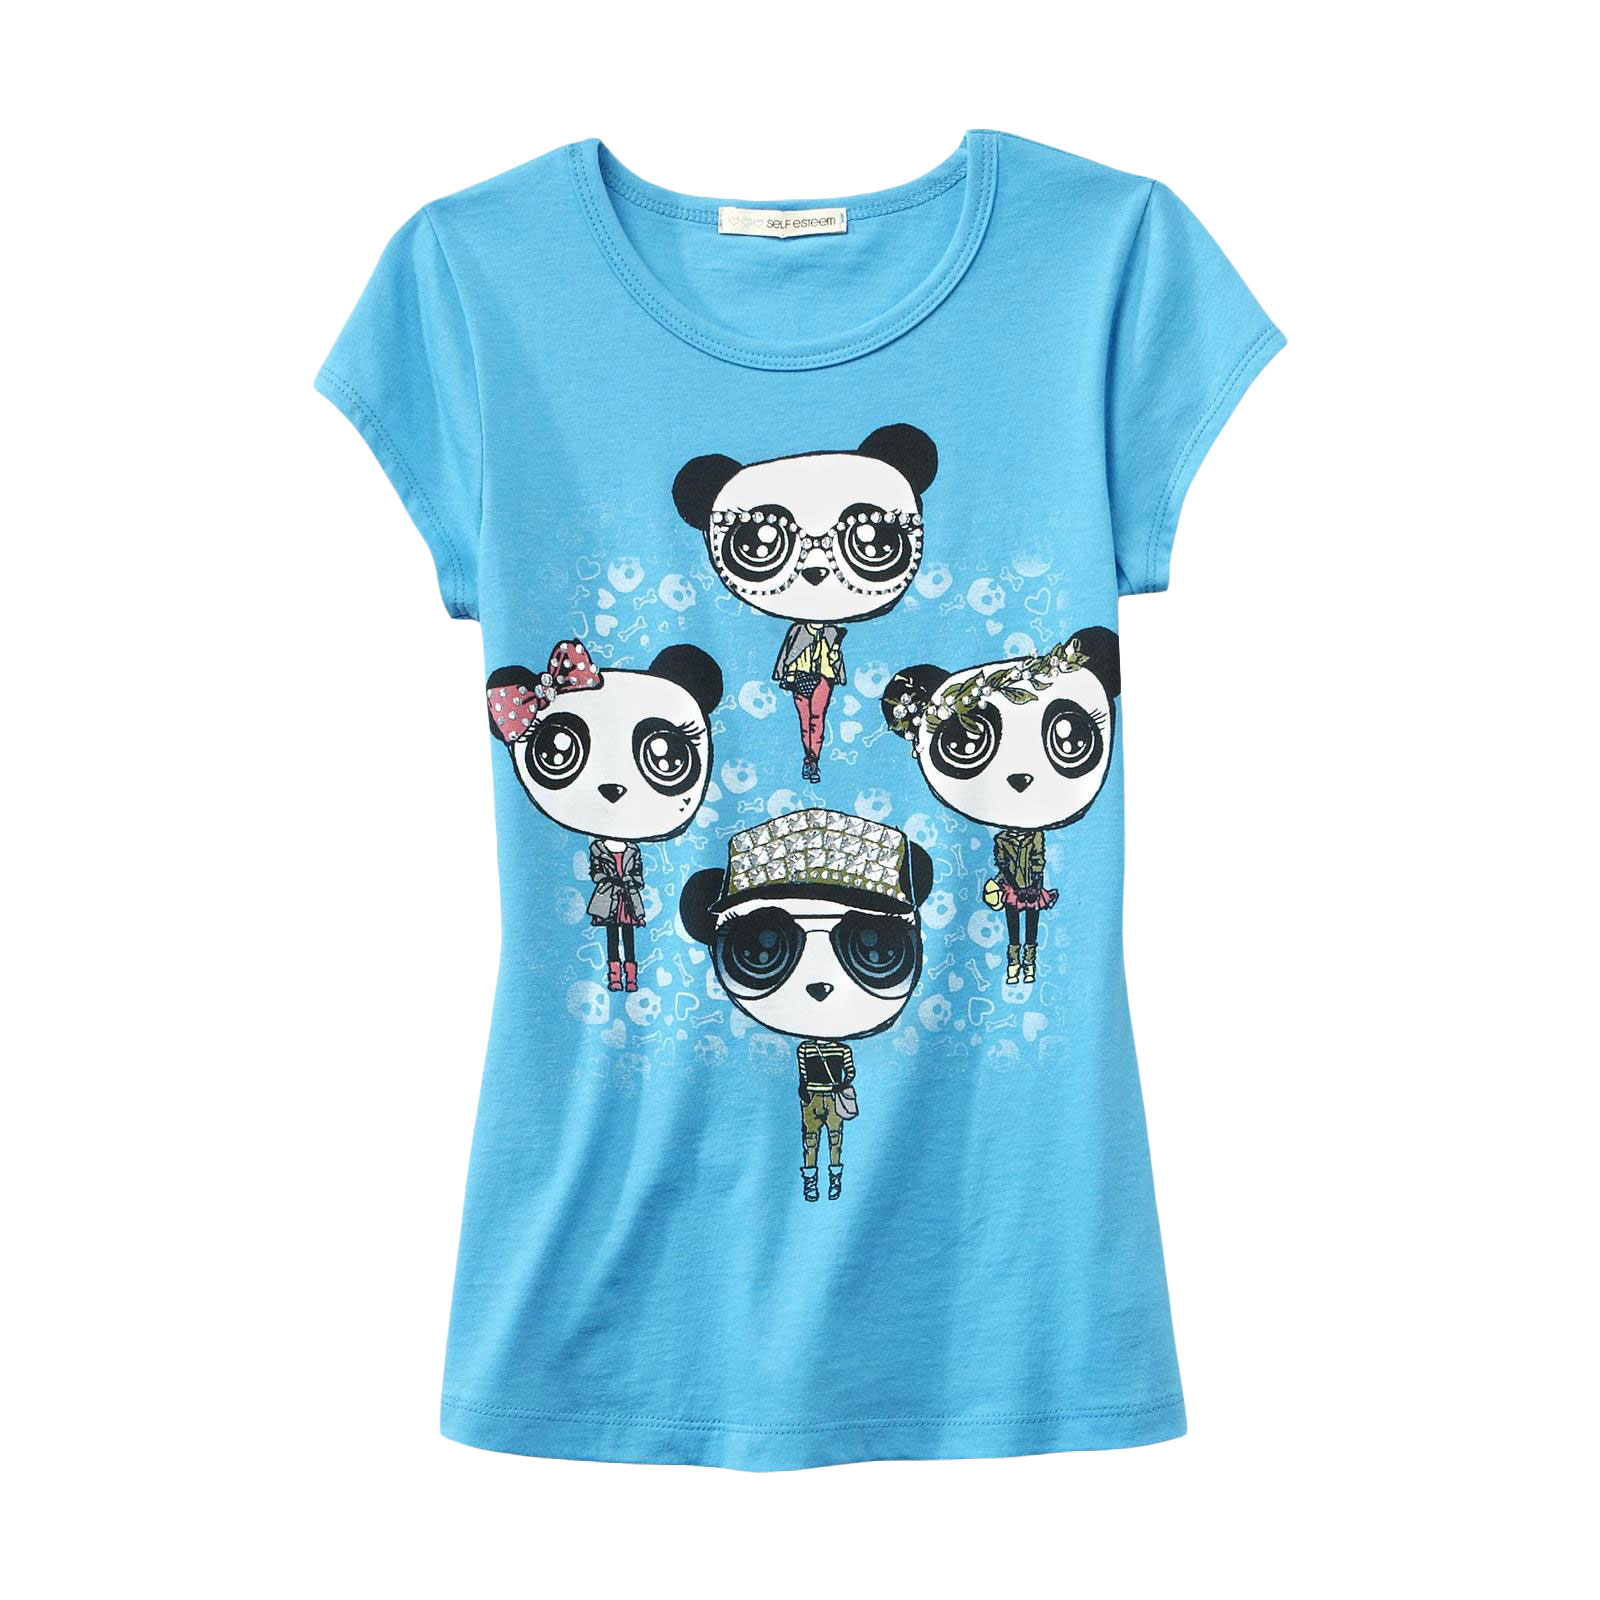 Self Esteem Girl's Graphic T-Shirt - Pandas